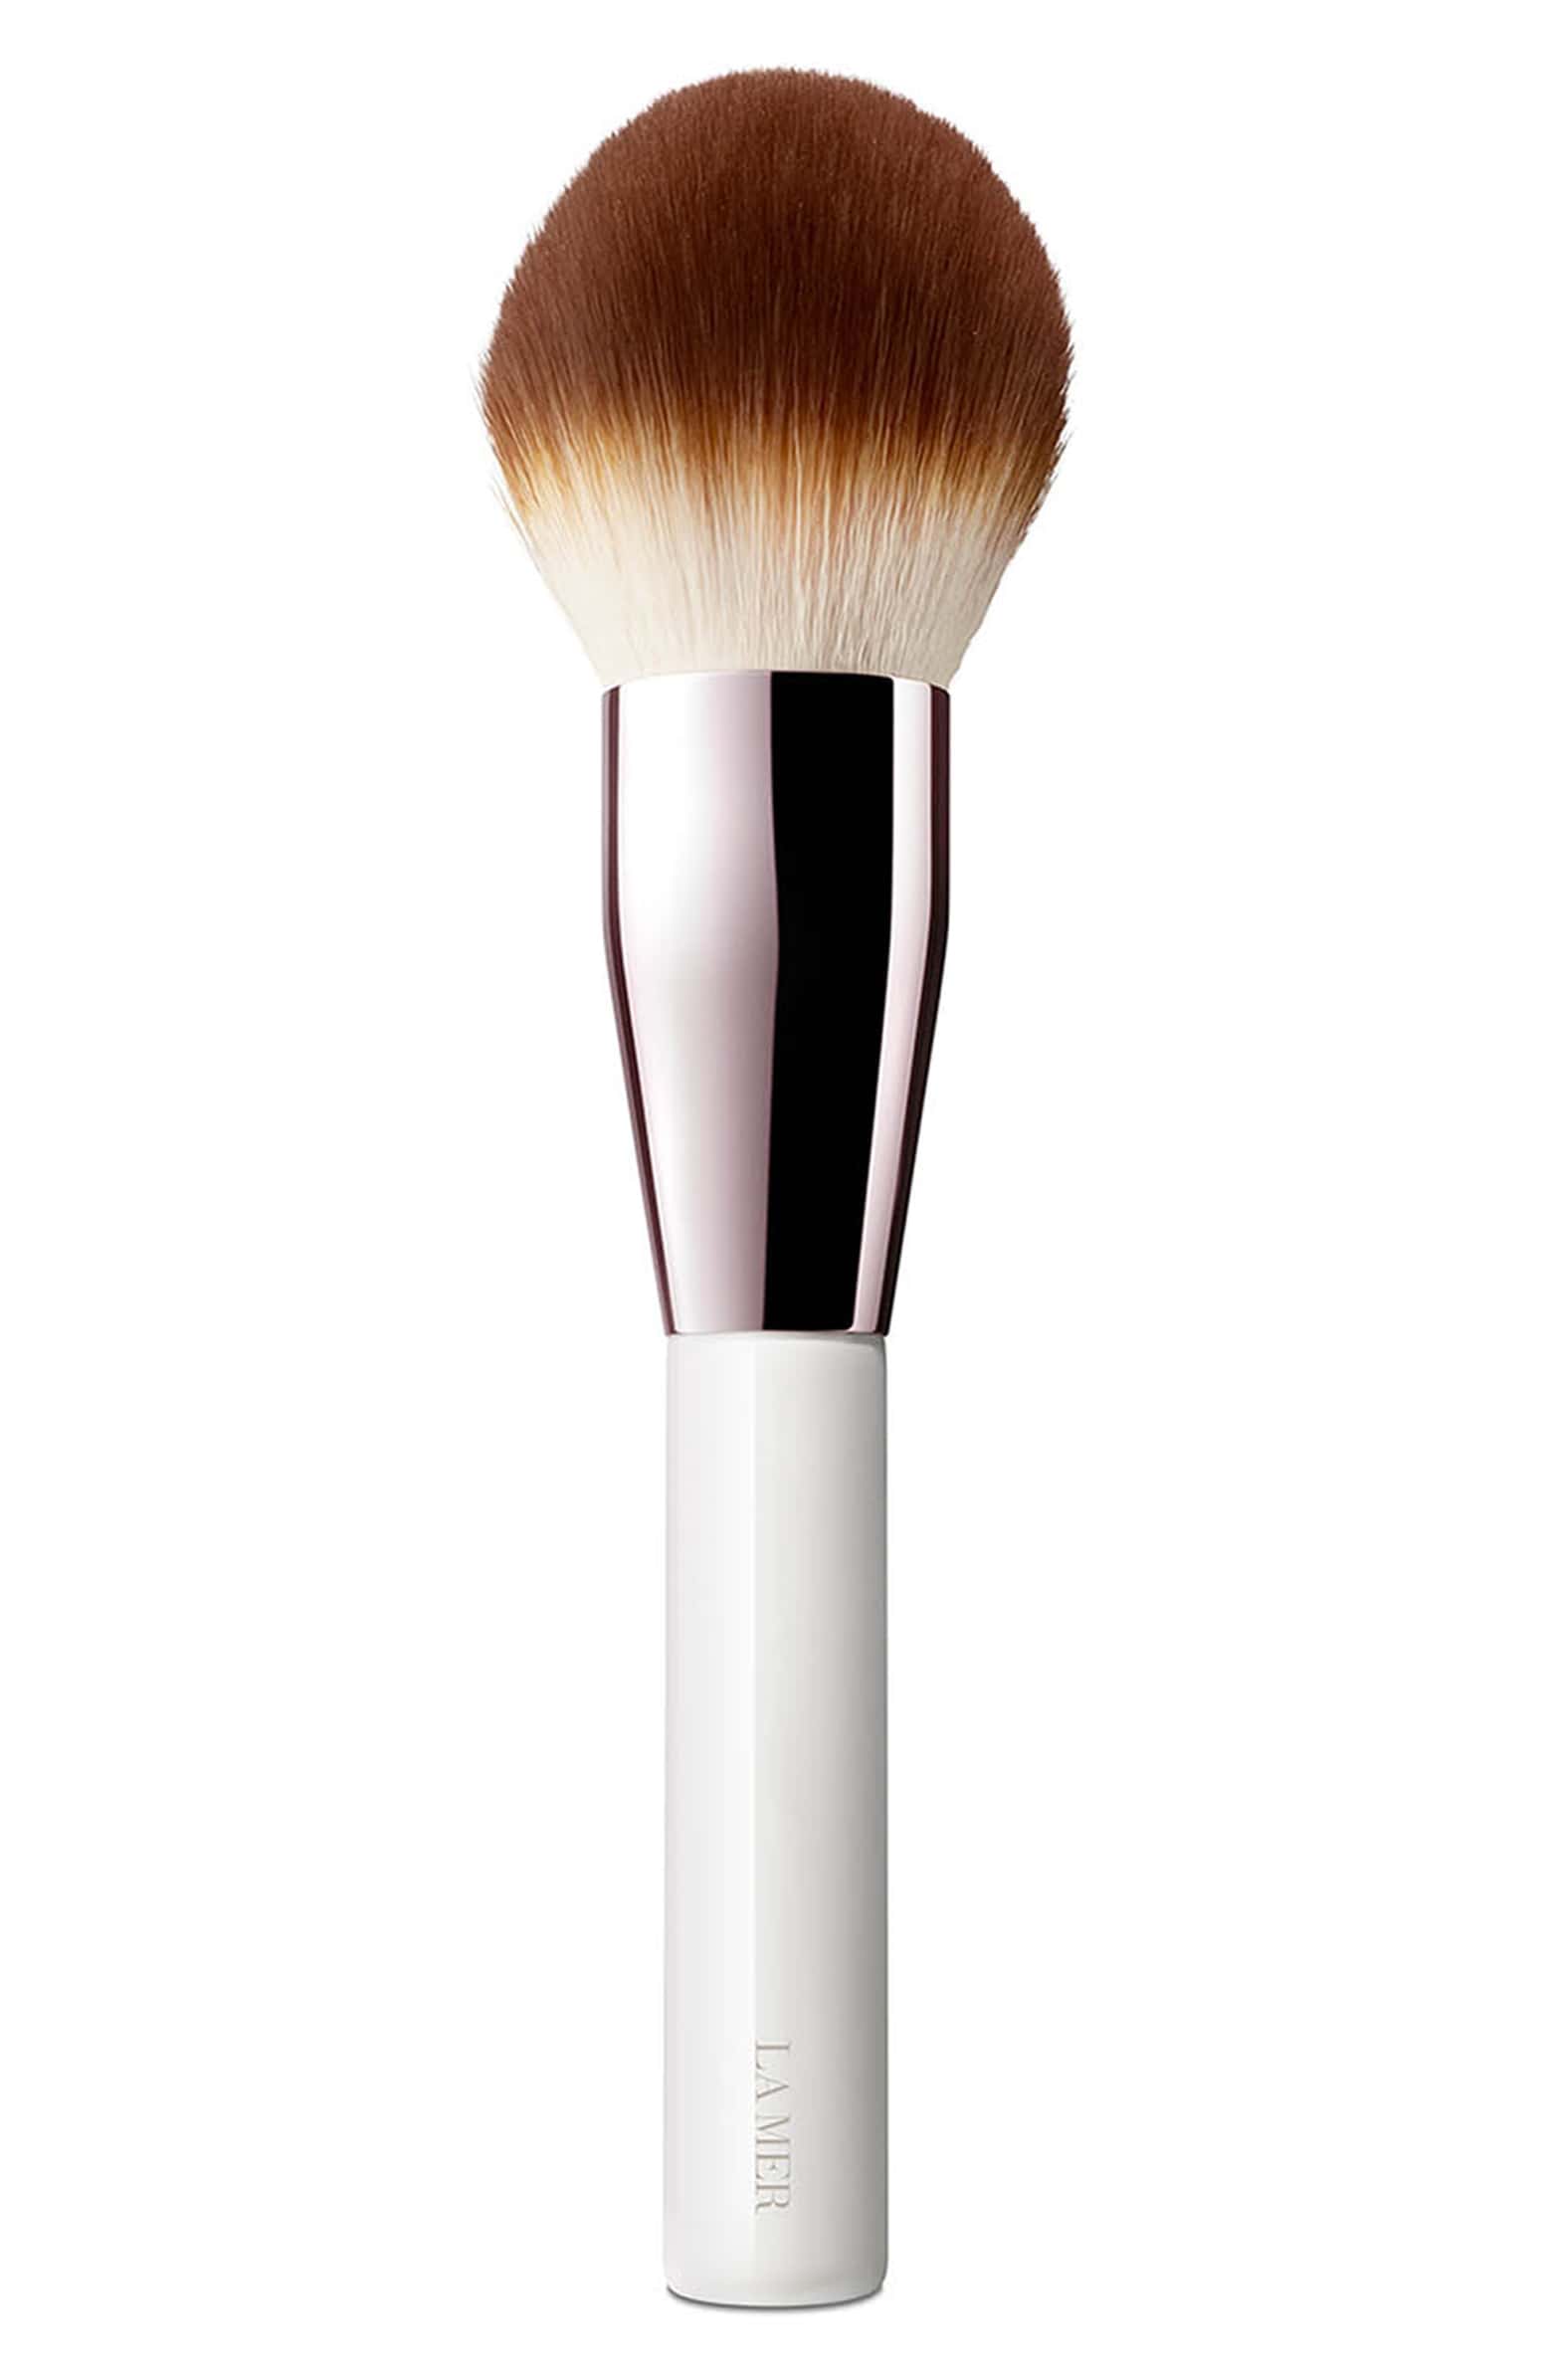 How to clean makeup brushes: La Mer Loose Powder Brush